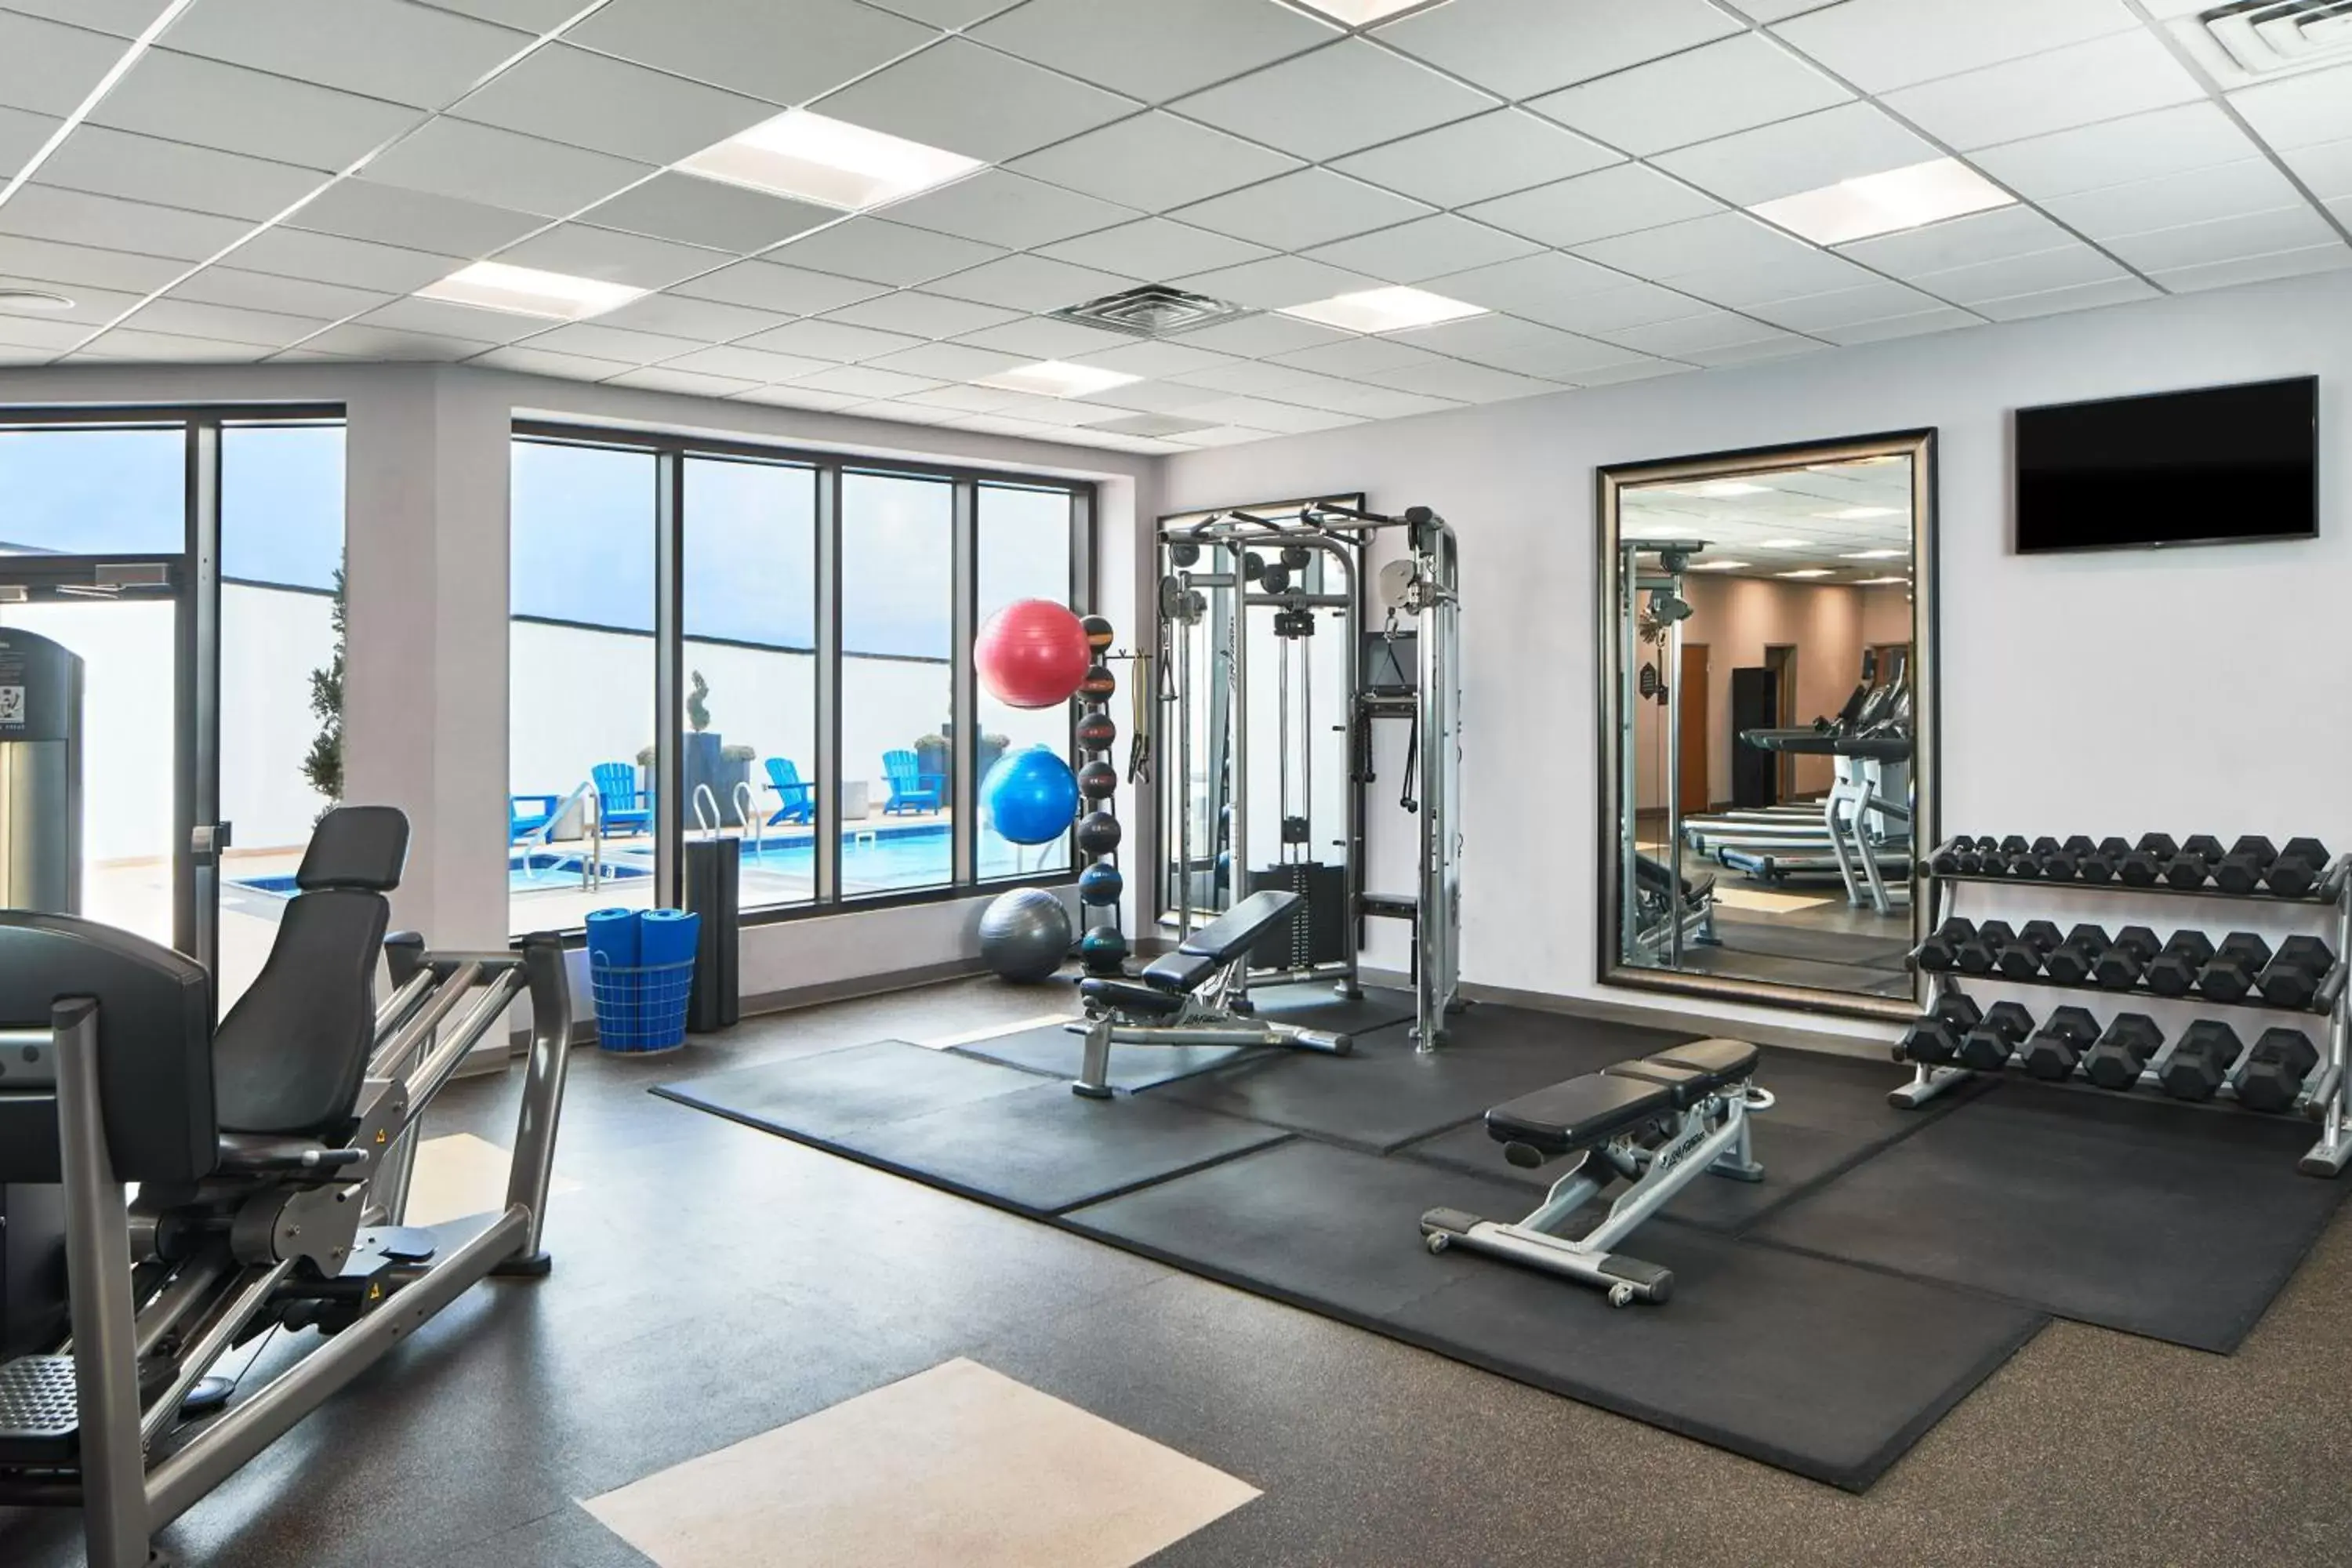 Fitness centre/facilities, Fitness Center/Facilities in Renaissance Dallas Hotel